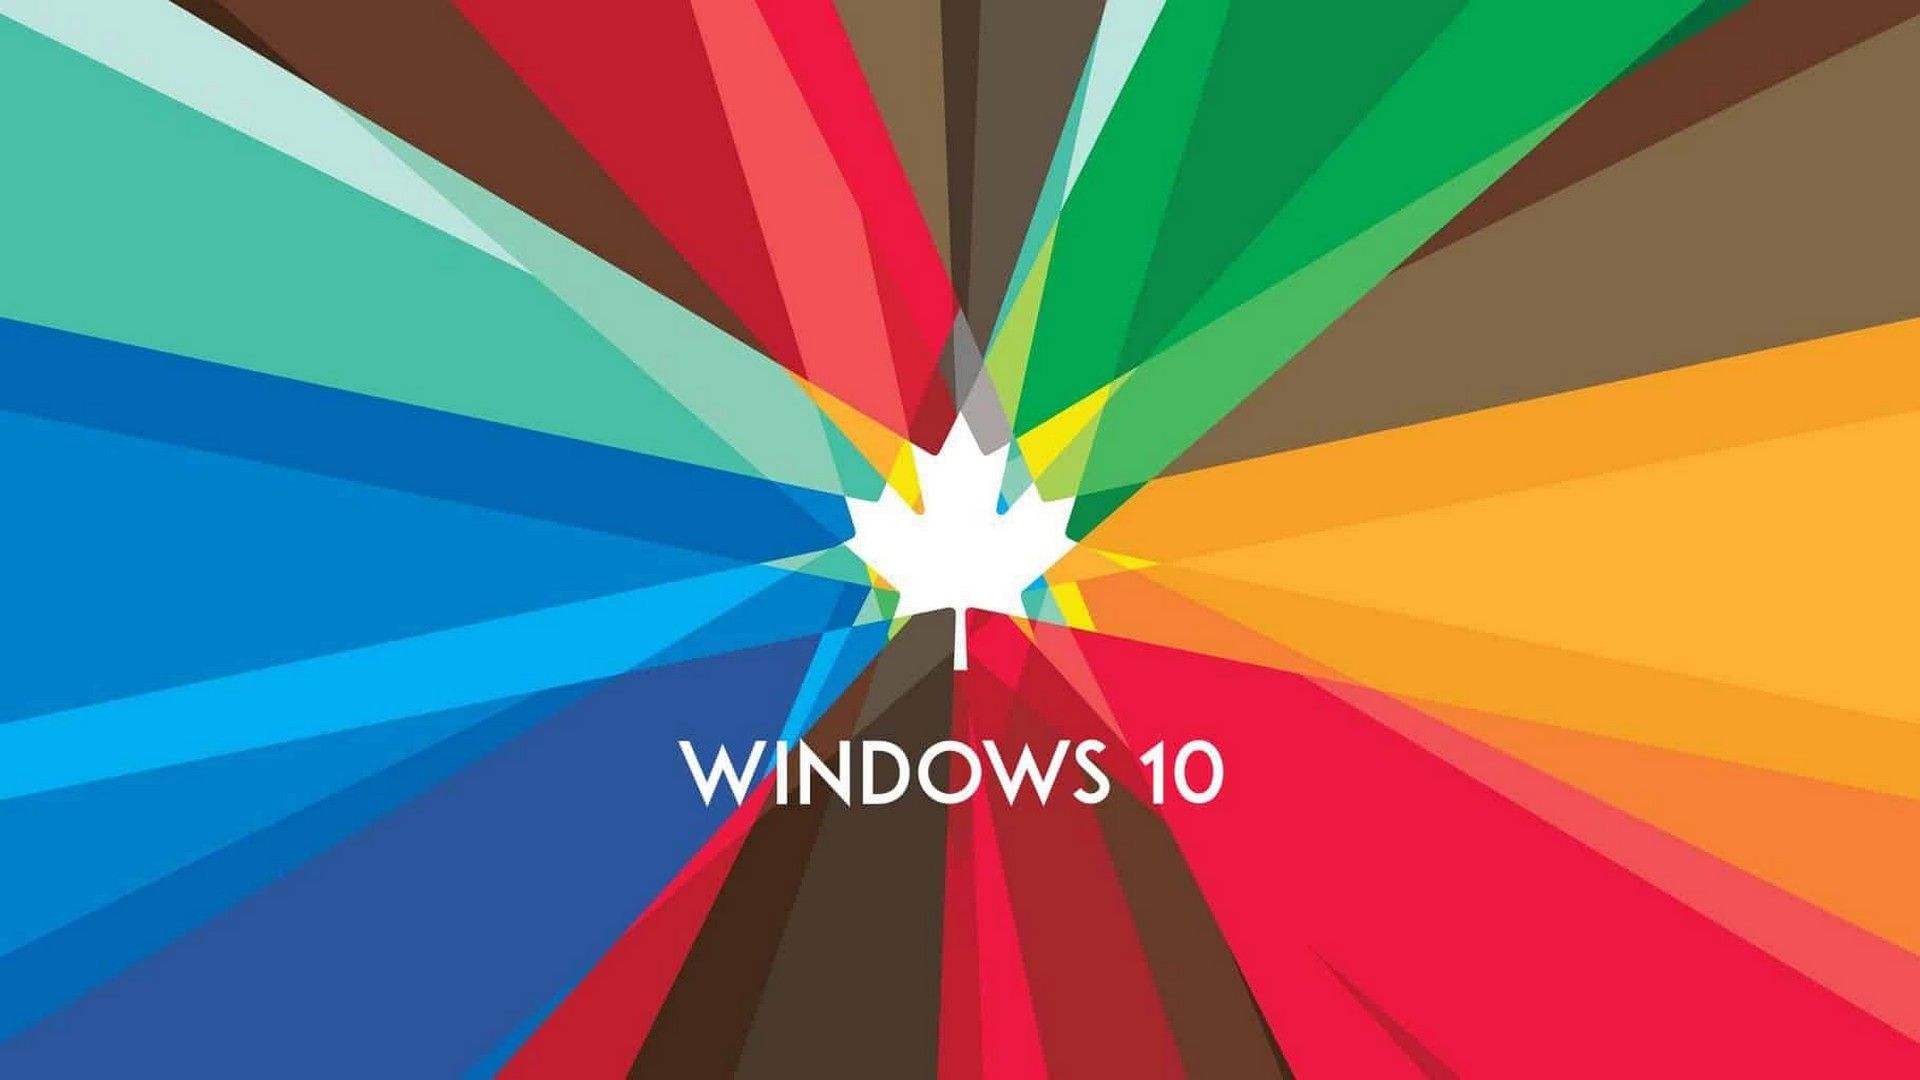 Wallpaper Windows 10 Desktop Cute Wallpaper